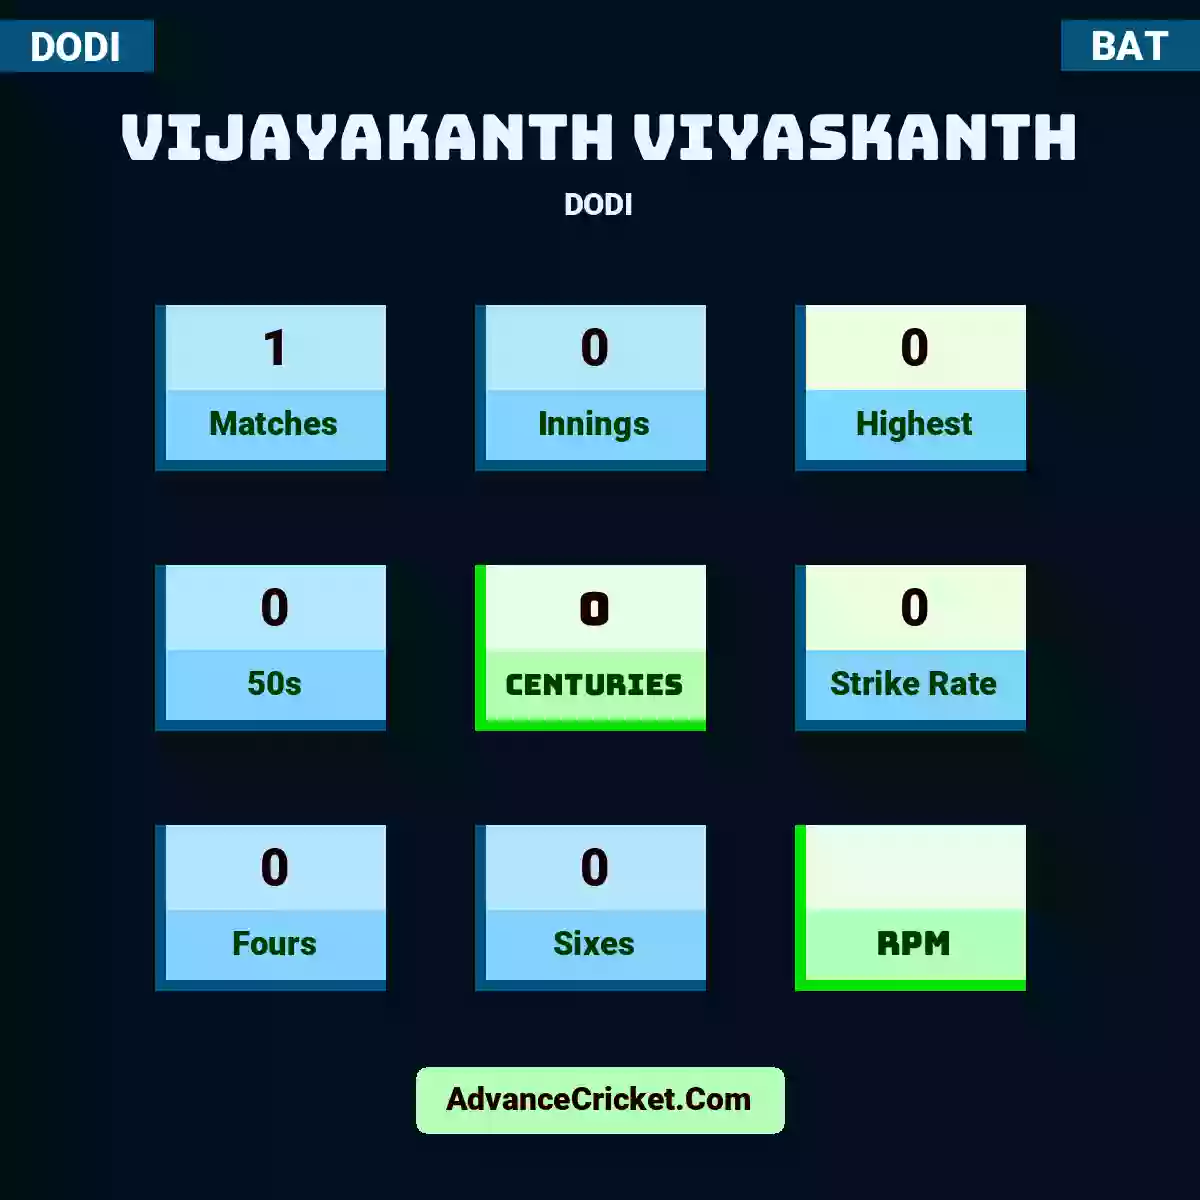 Vijayakanth Viyaskanth DODI , Vijayakanth Viyaskanth played 1 matches, scored 0 runs as highest, 0 half-centuries, and 0 centuries, with a strike rate of 0. V.Viyaskanth hit 0 fours and 0 sixes.